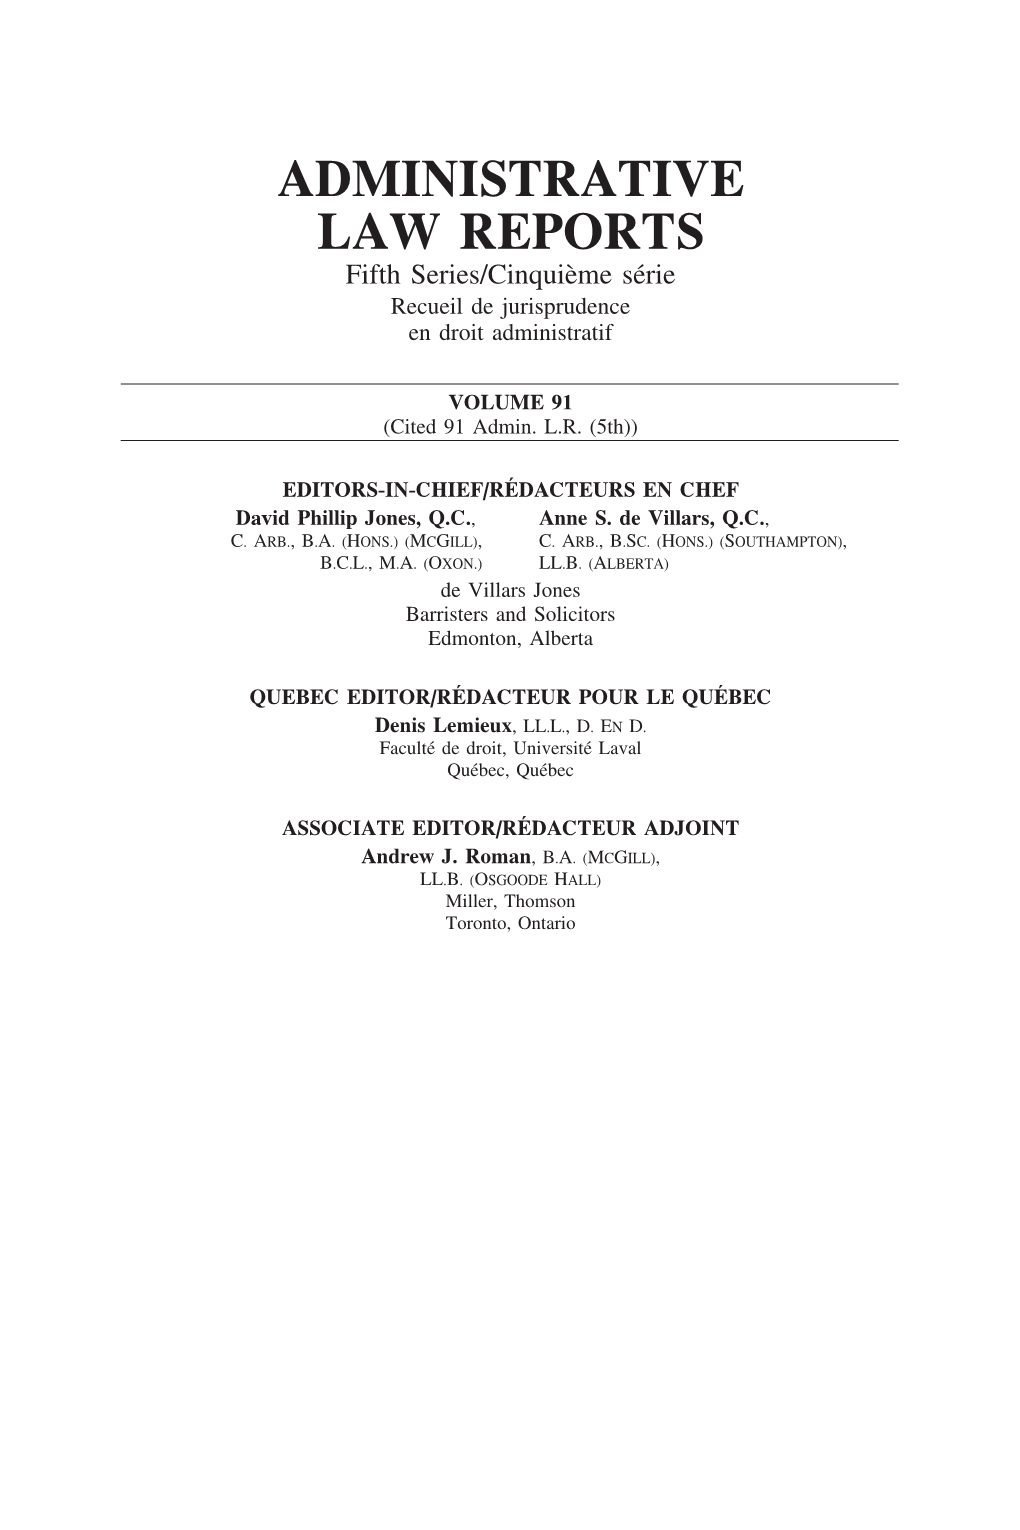 ADMINISTRATIVE LAW REPORTS Fifth Series/Cinqui`Eme S´Erie Recueil De Jurisprudence En Droit Administratif